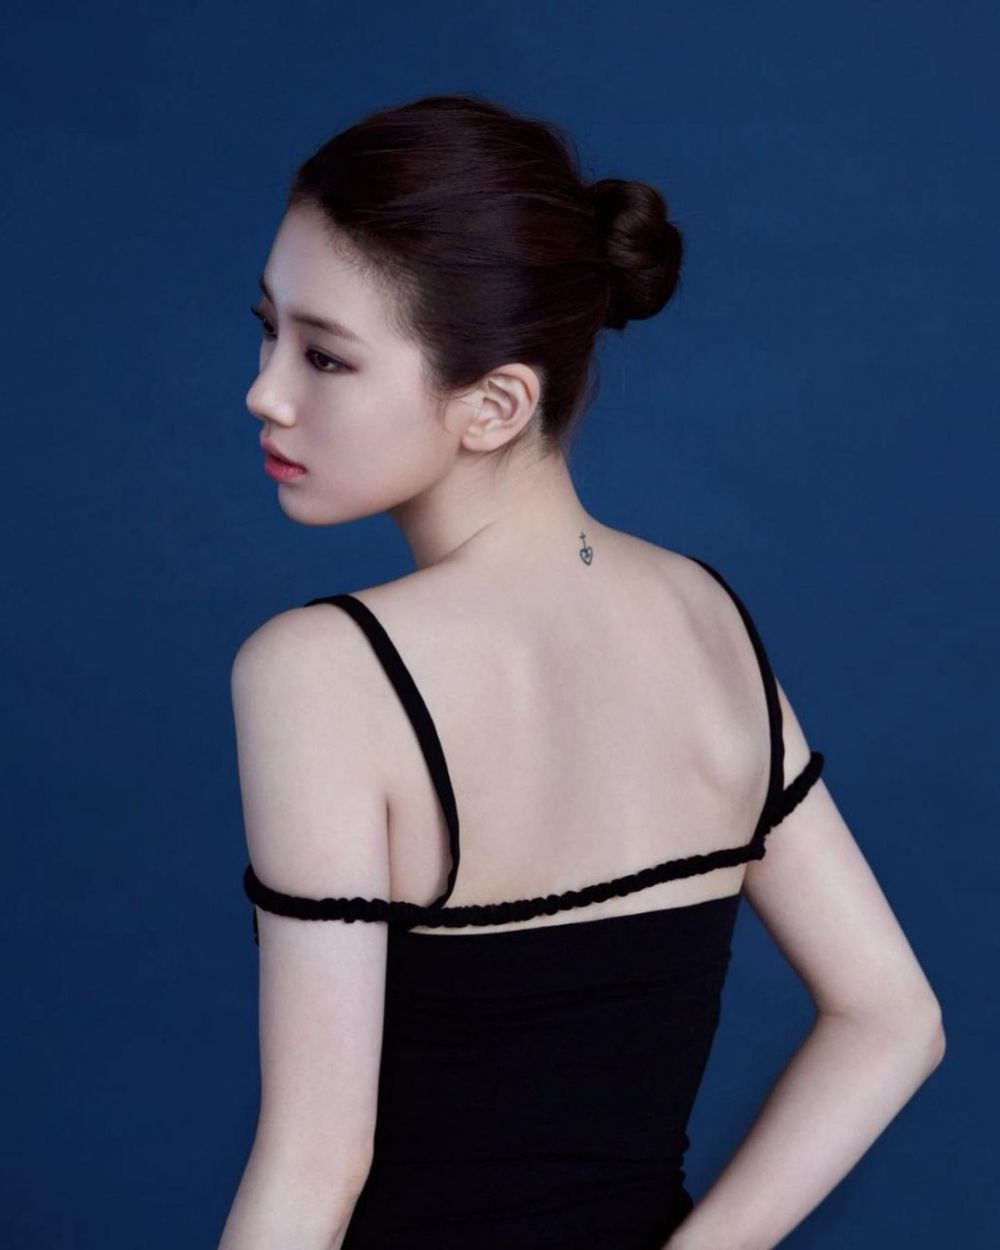 Potret 11 aktris Korea tak sengaja pamer tato, punya Suzy gambar hati